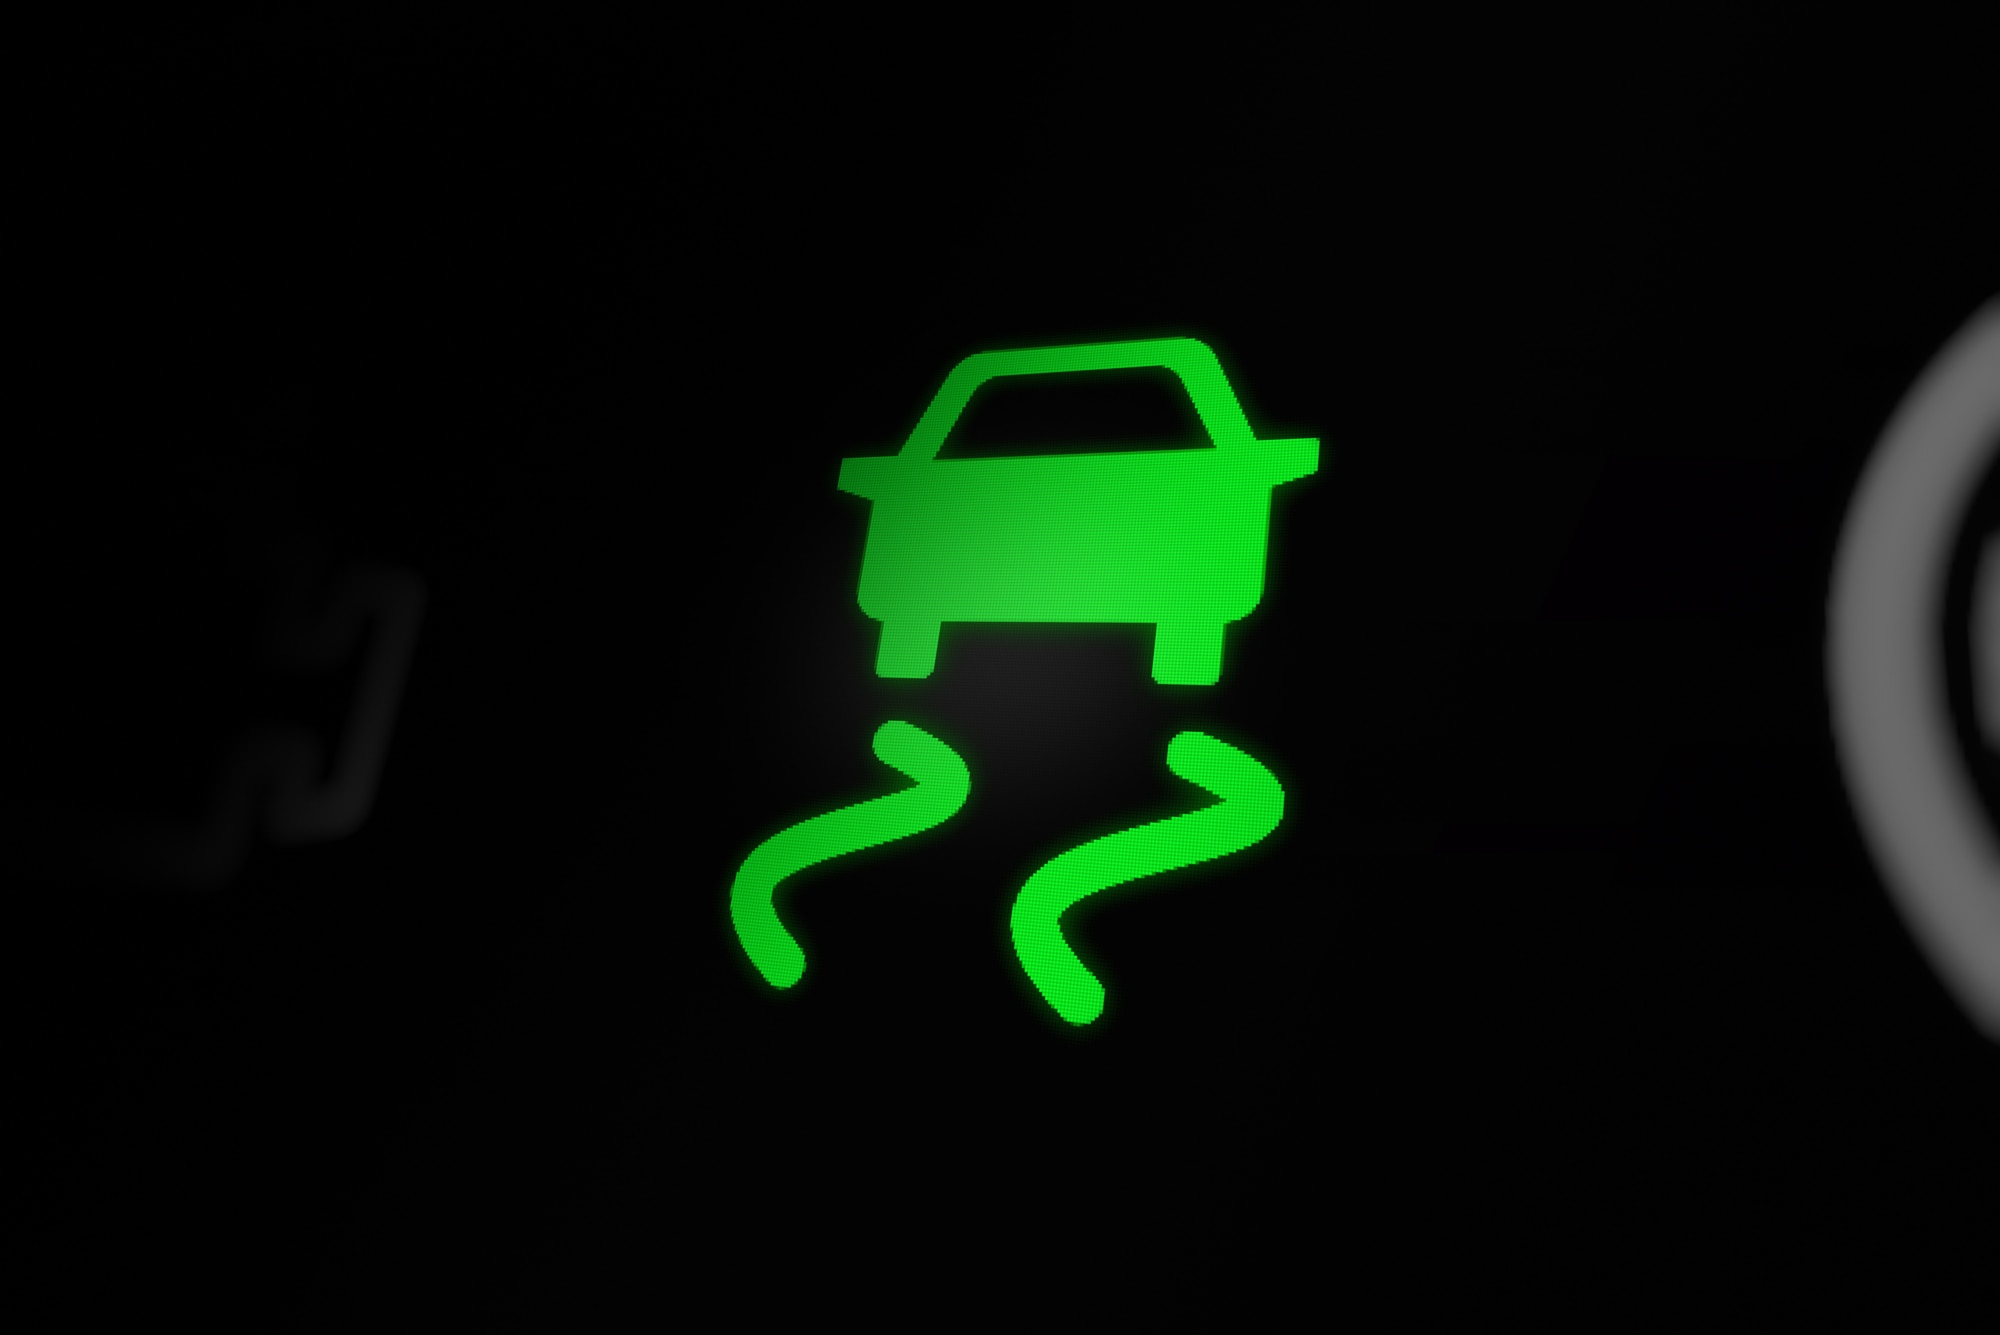 Green car graphic skidding on black background (ESC graphic)